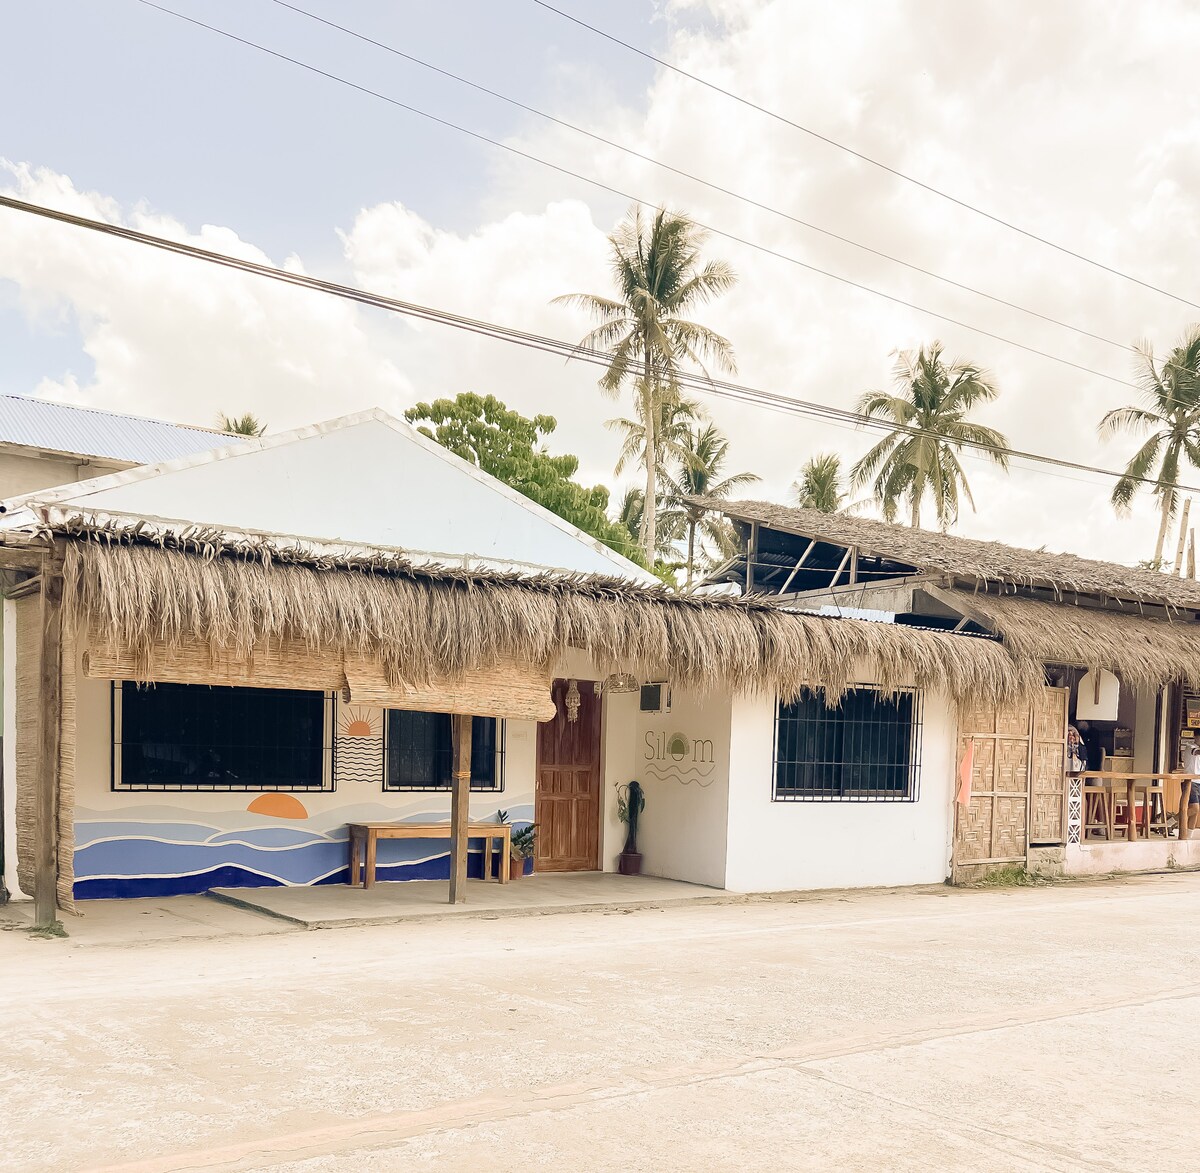 Kanaway Shop附近的1卧室Silom Hostel Siargao (B)